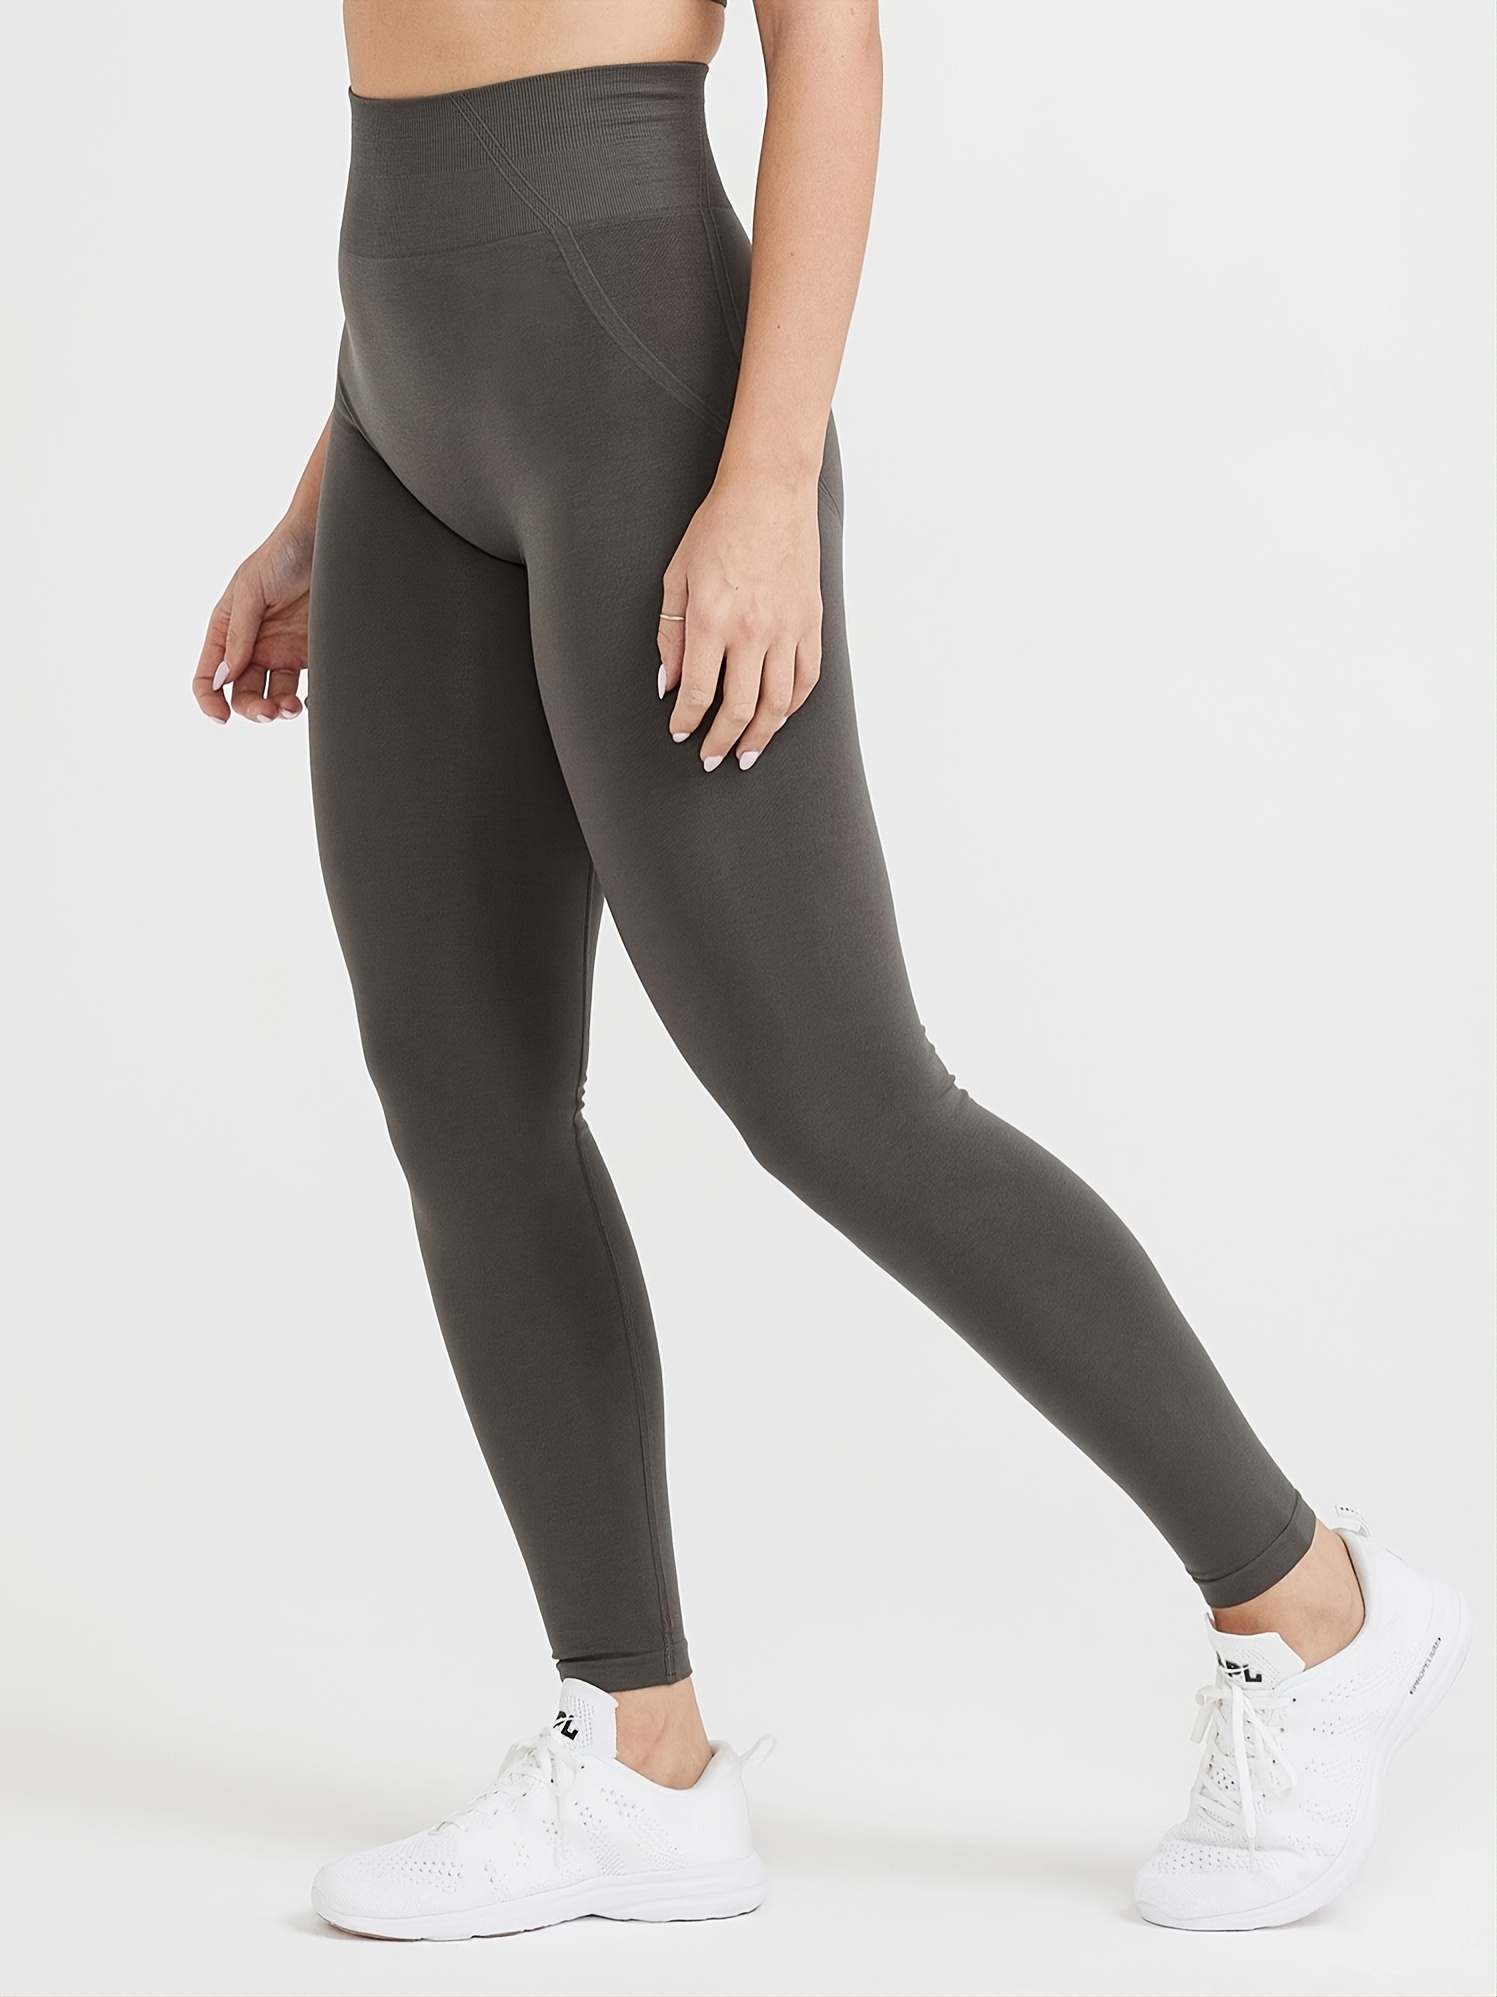 Women's Shiny Oily Shimmer Dance Pants High Waist Push Up Leggings Gym Yoga  Slim Pants